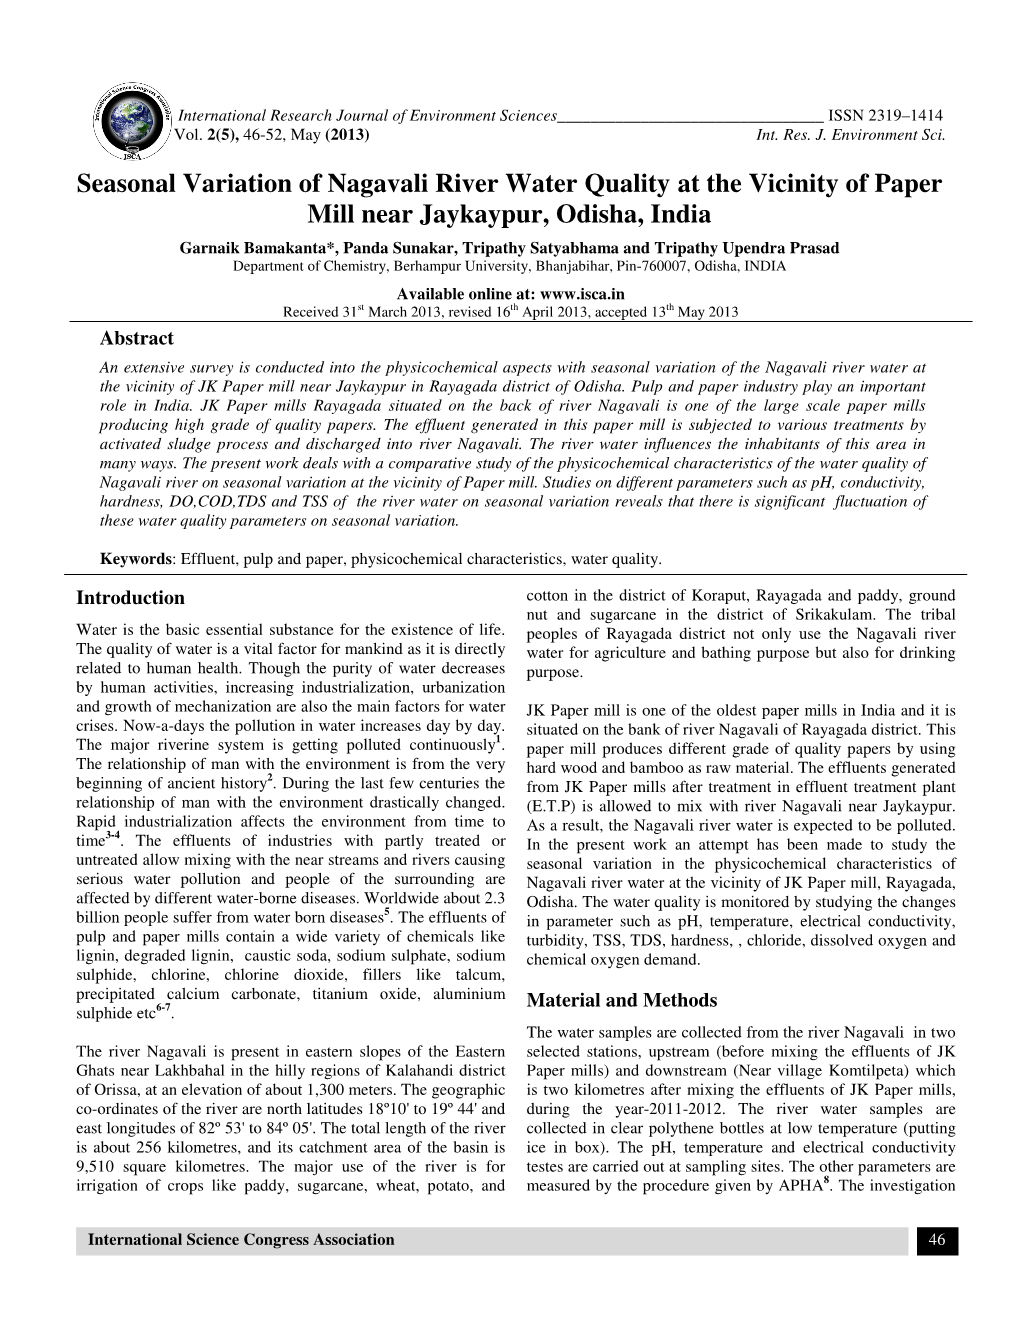 Seasonal Variation of Nagavali River Water Quality at the Vicinity of Paper Mill Near Jaykaypur, Odisha, India